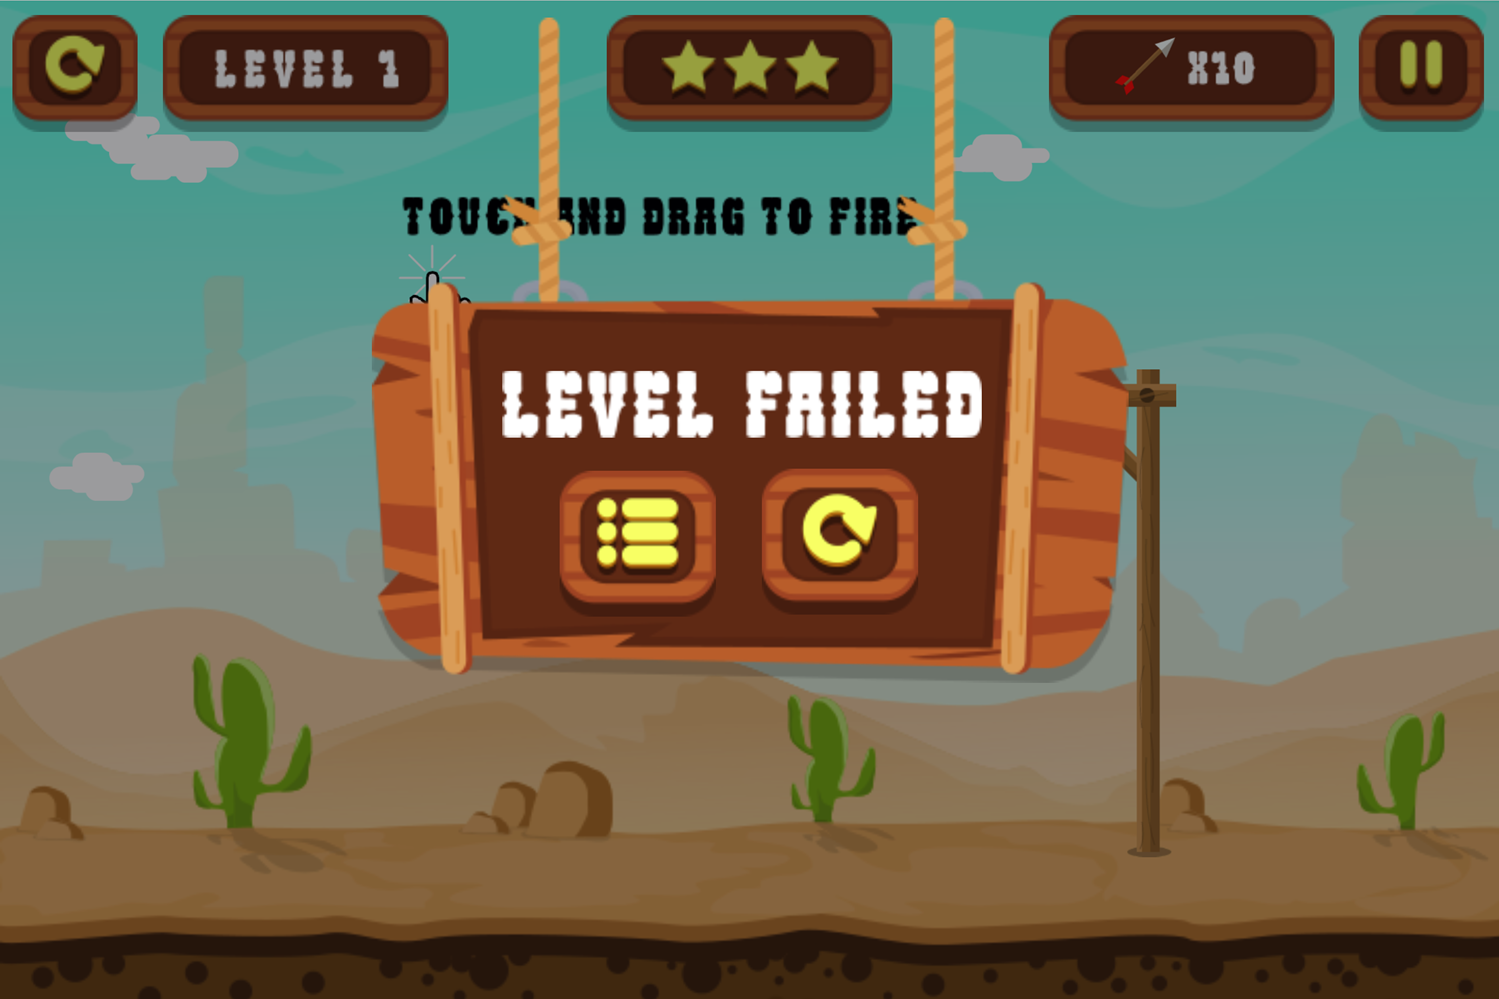 Save the Cowboy 2 Game Level Failed Screen Screenshot.